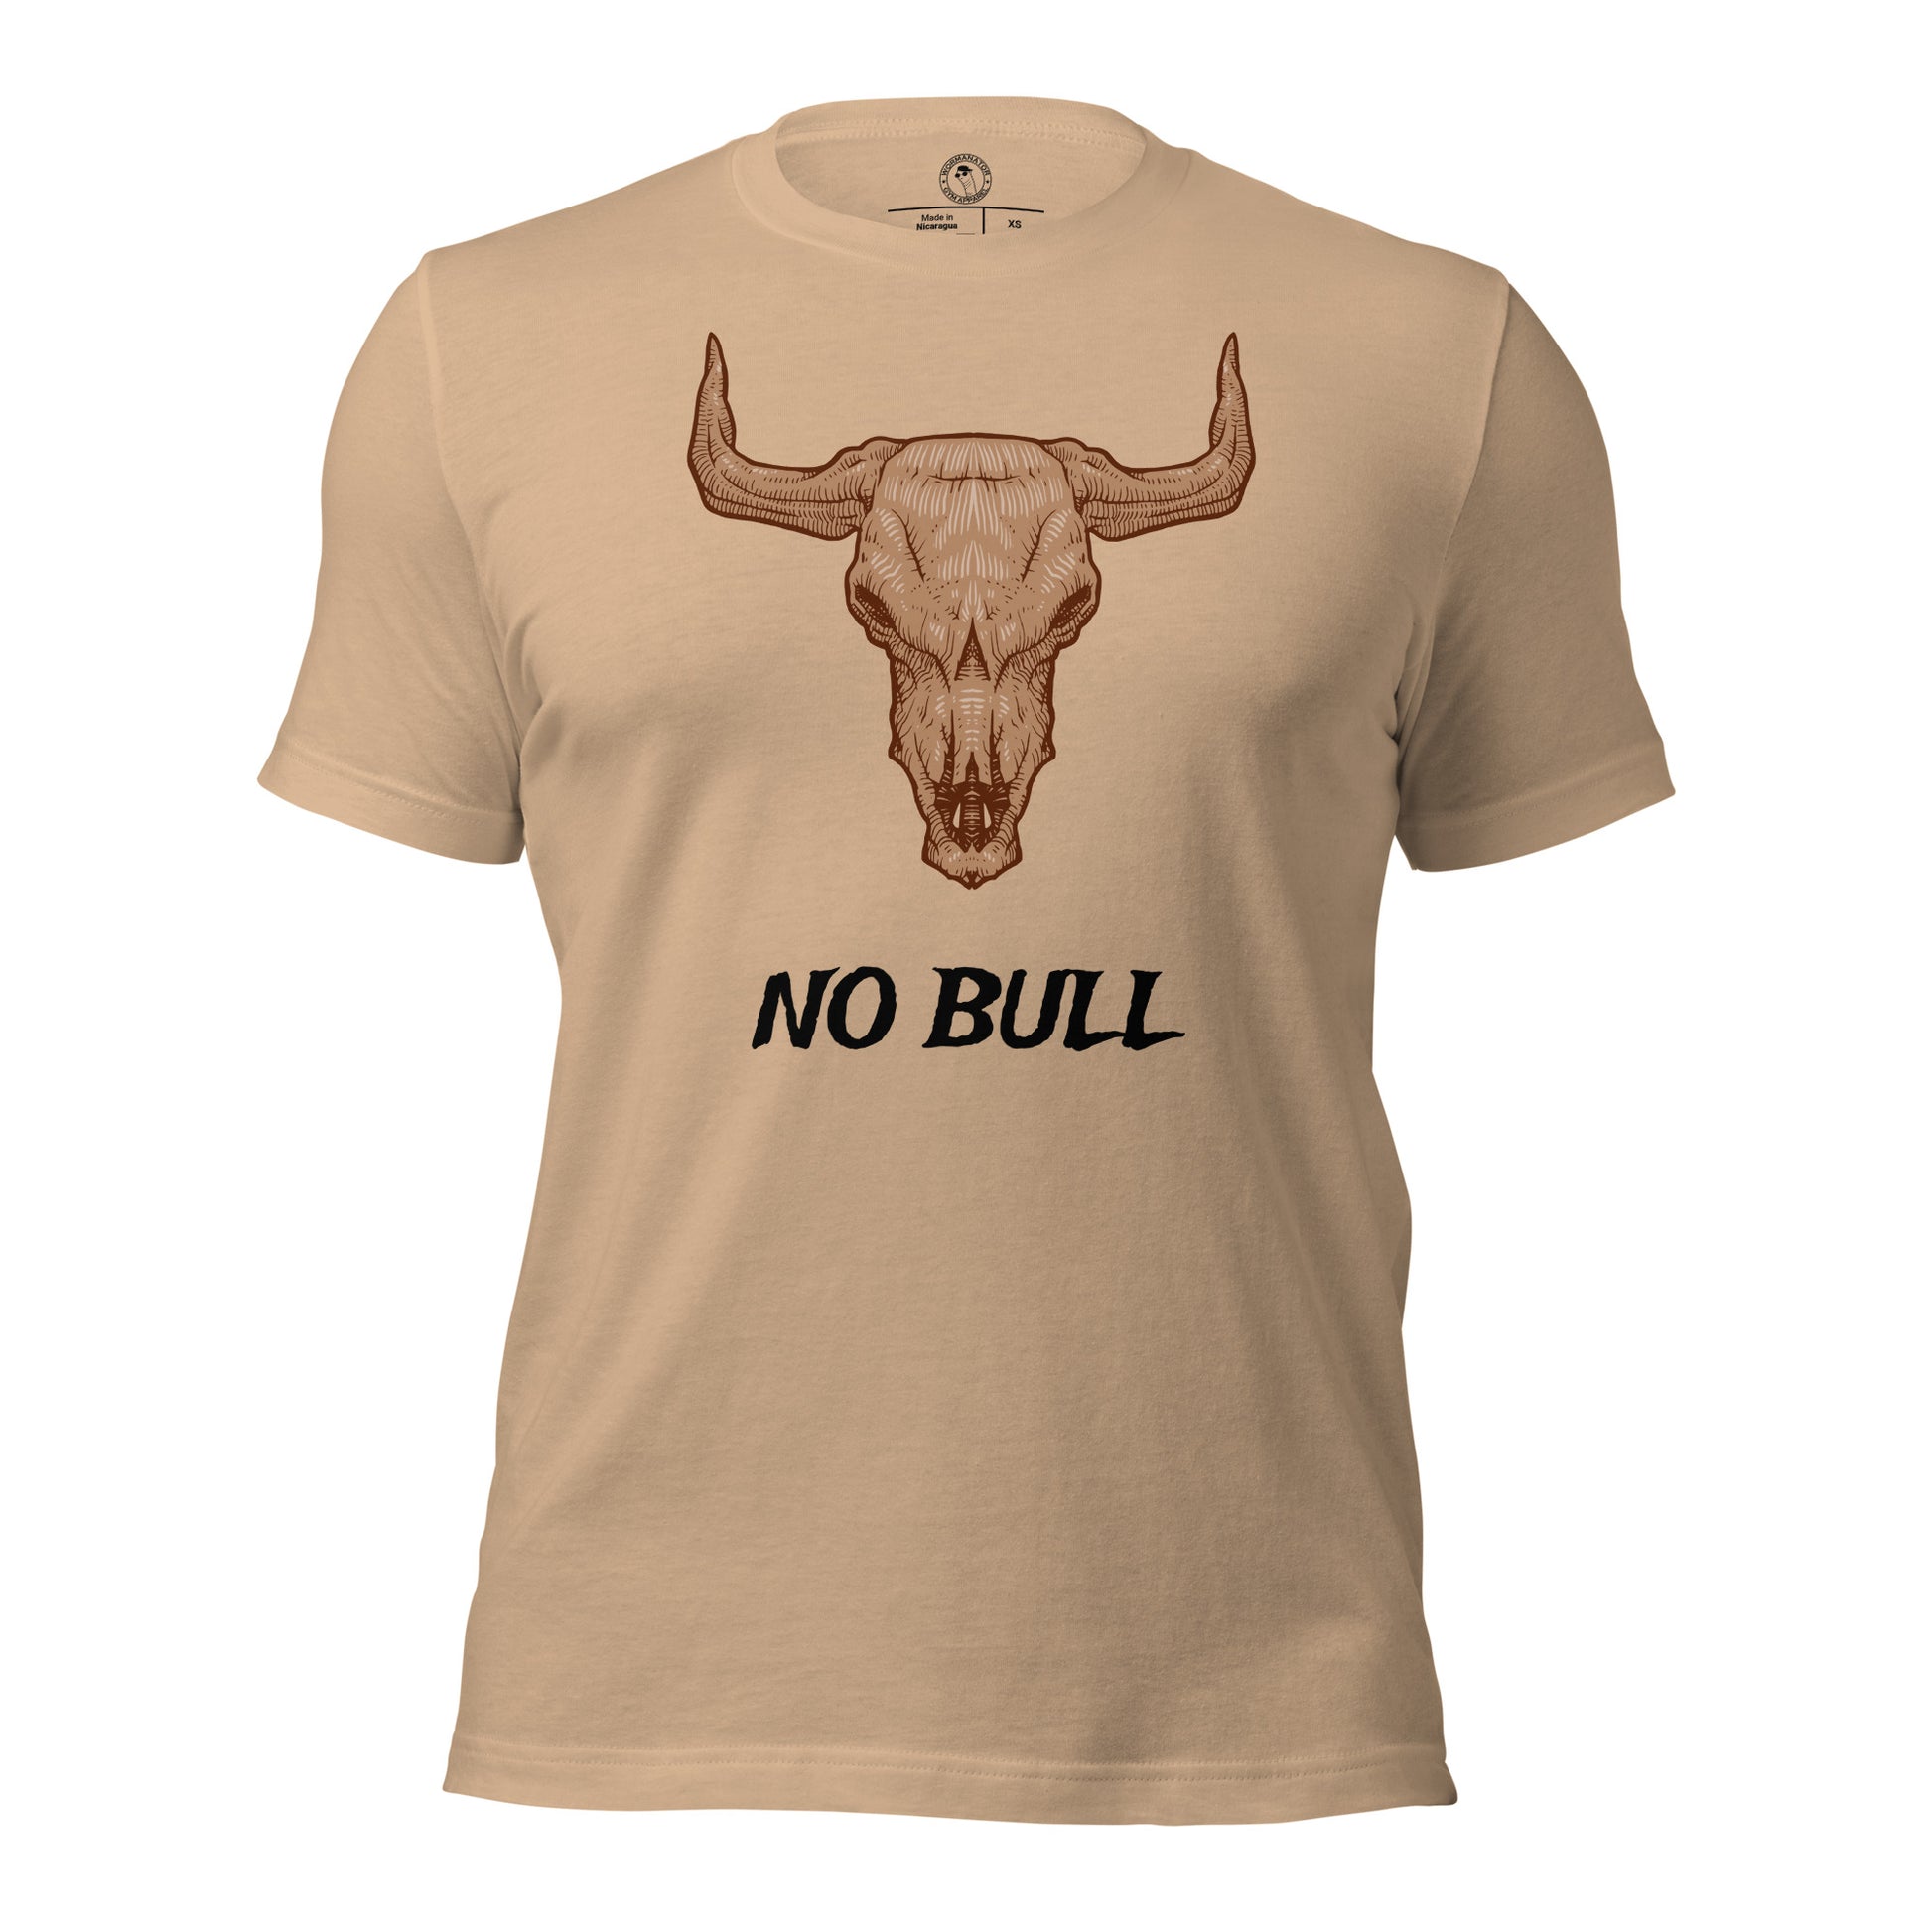 No Bull Shirt in Tan